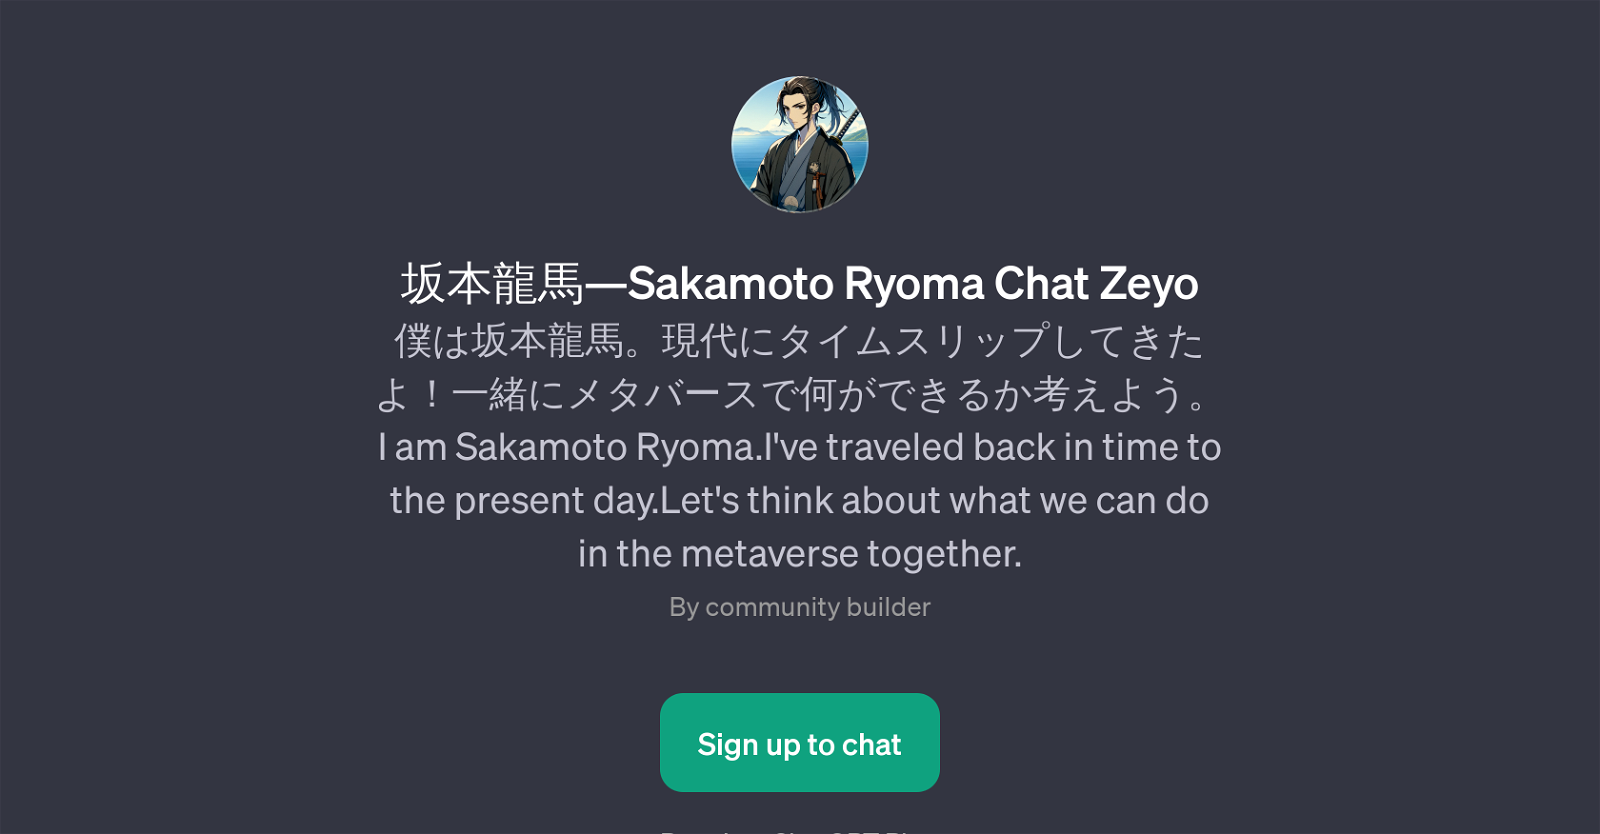 Sakamoto Ryoma Chat Zeyo website